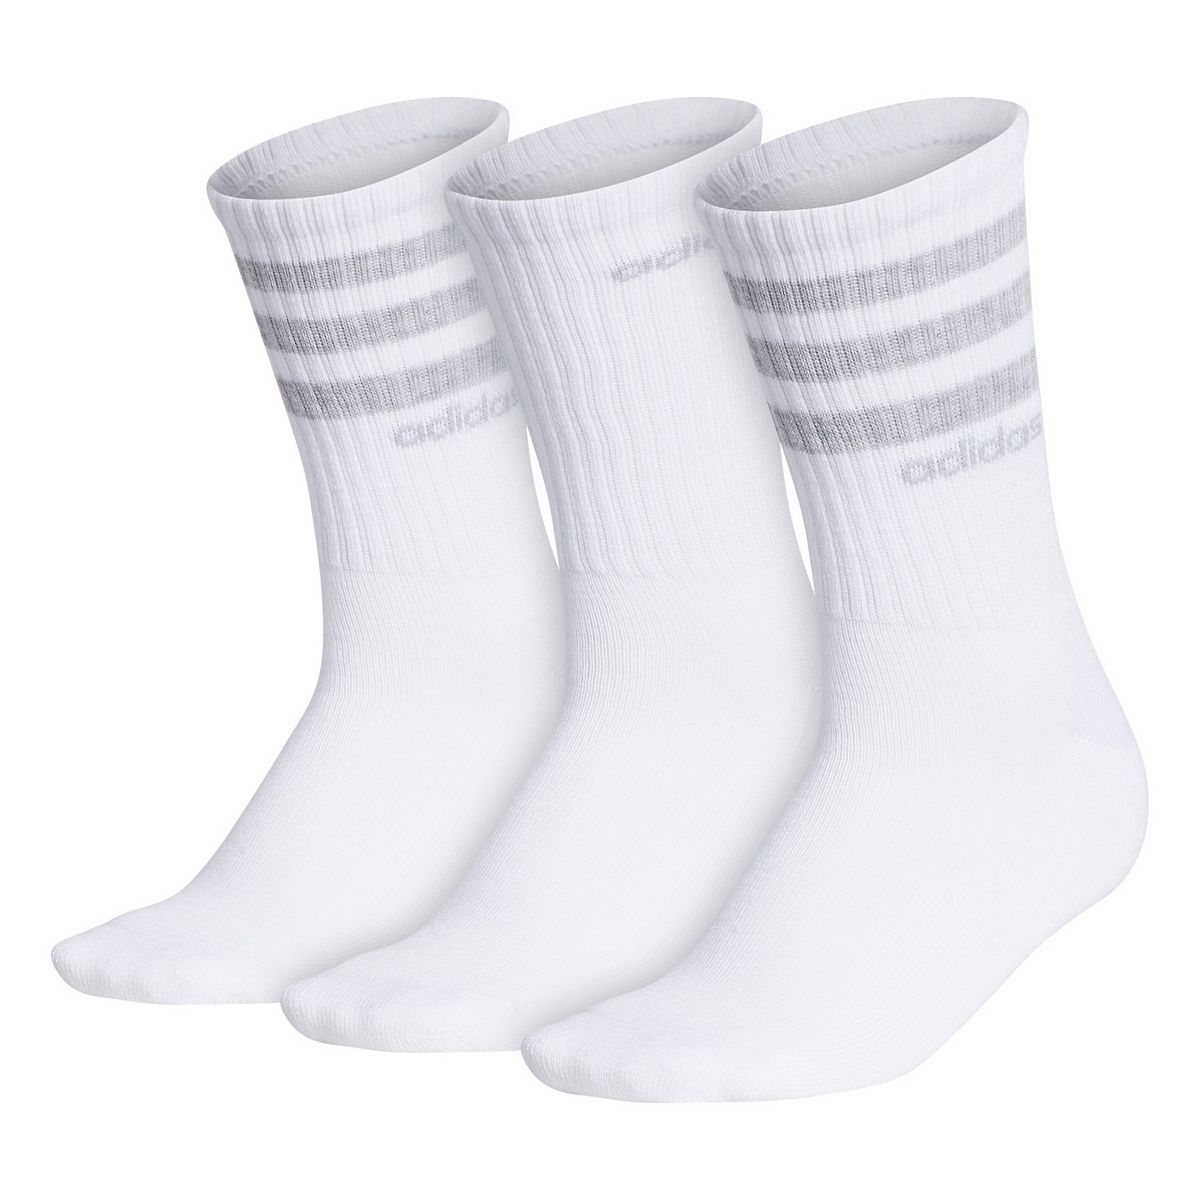 3-Pack Women's adidas 3-Stripe Crew Socks (White/Grey, Medium) $9.80 + Free Shipping w/ Prime or $25+